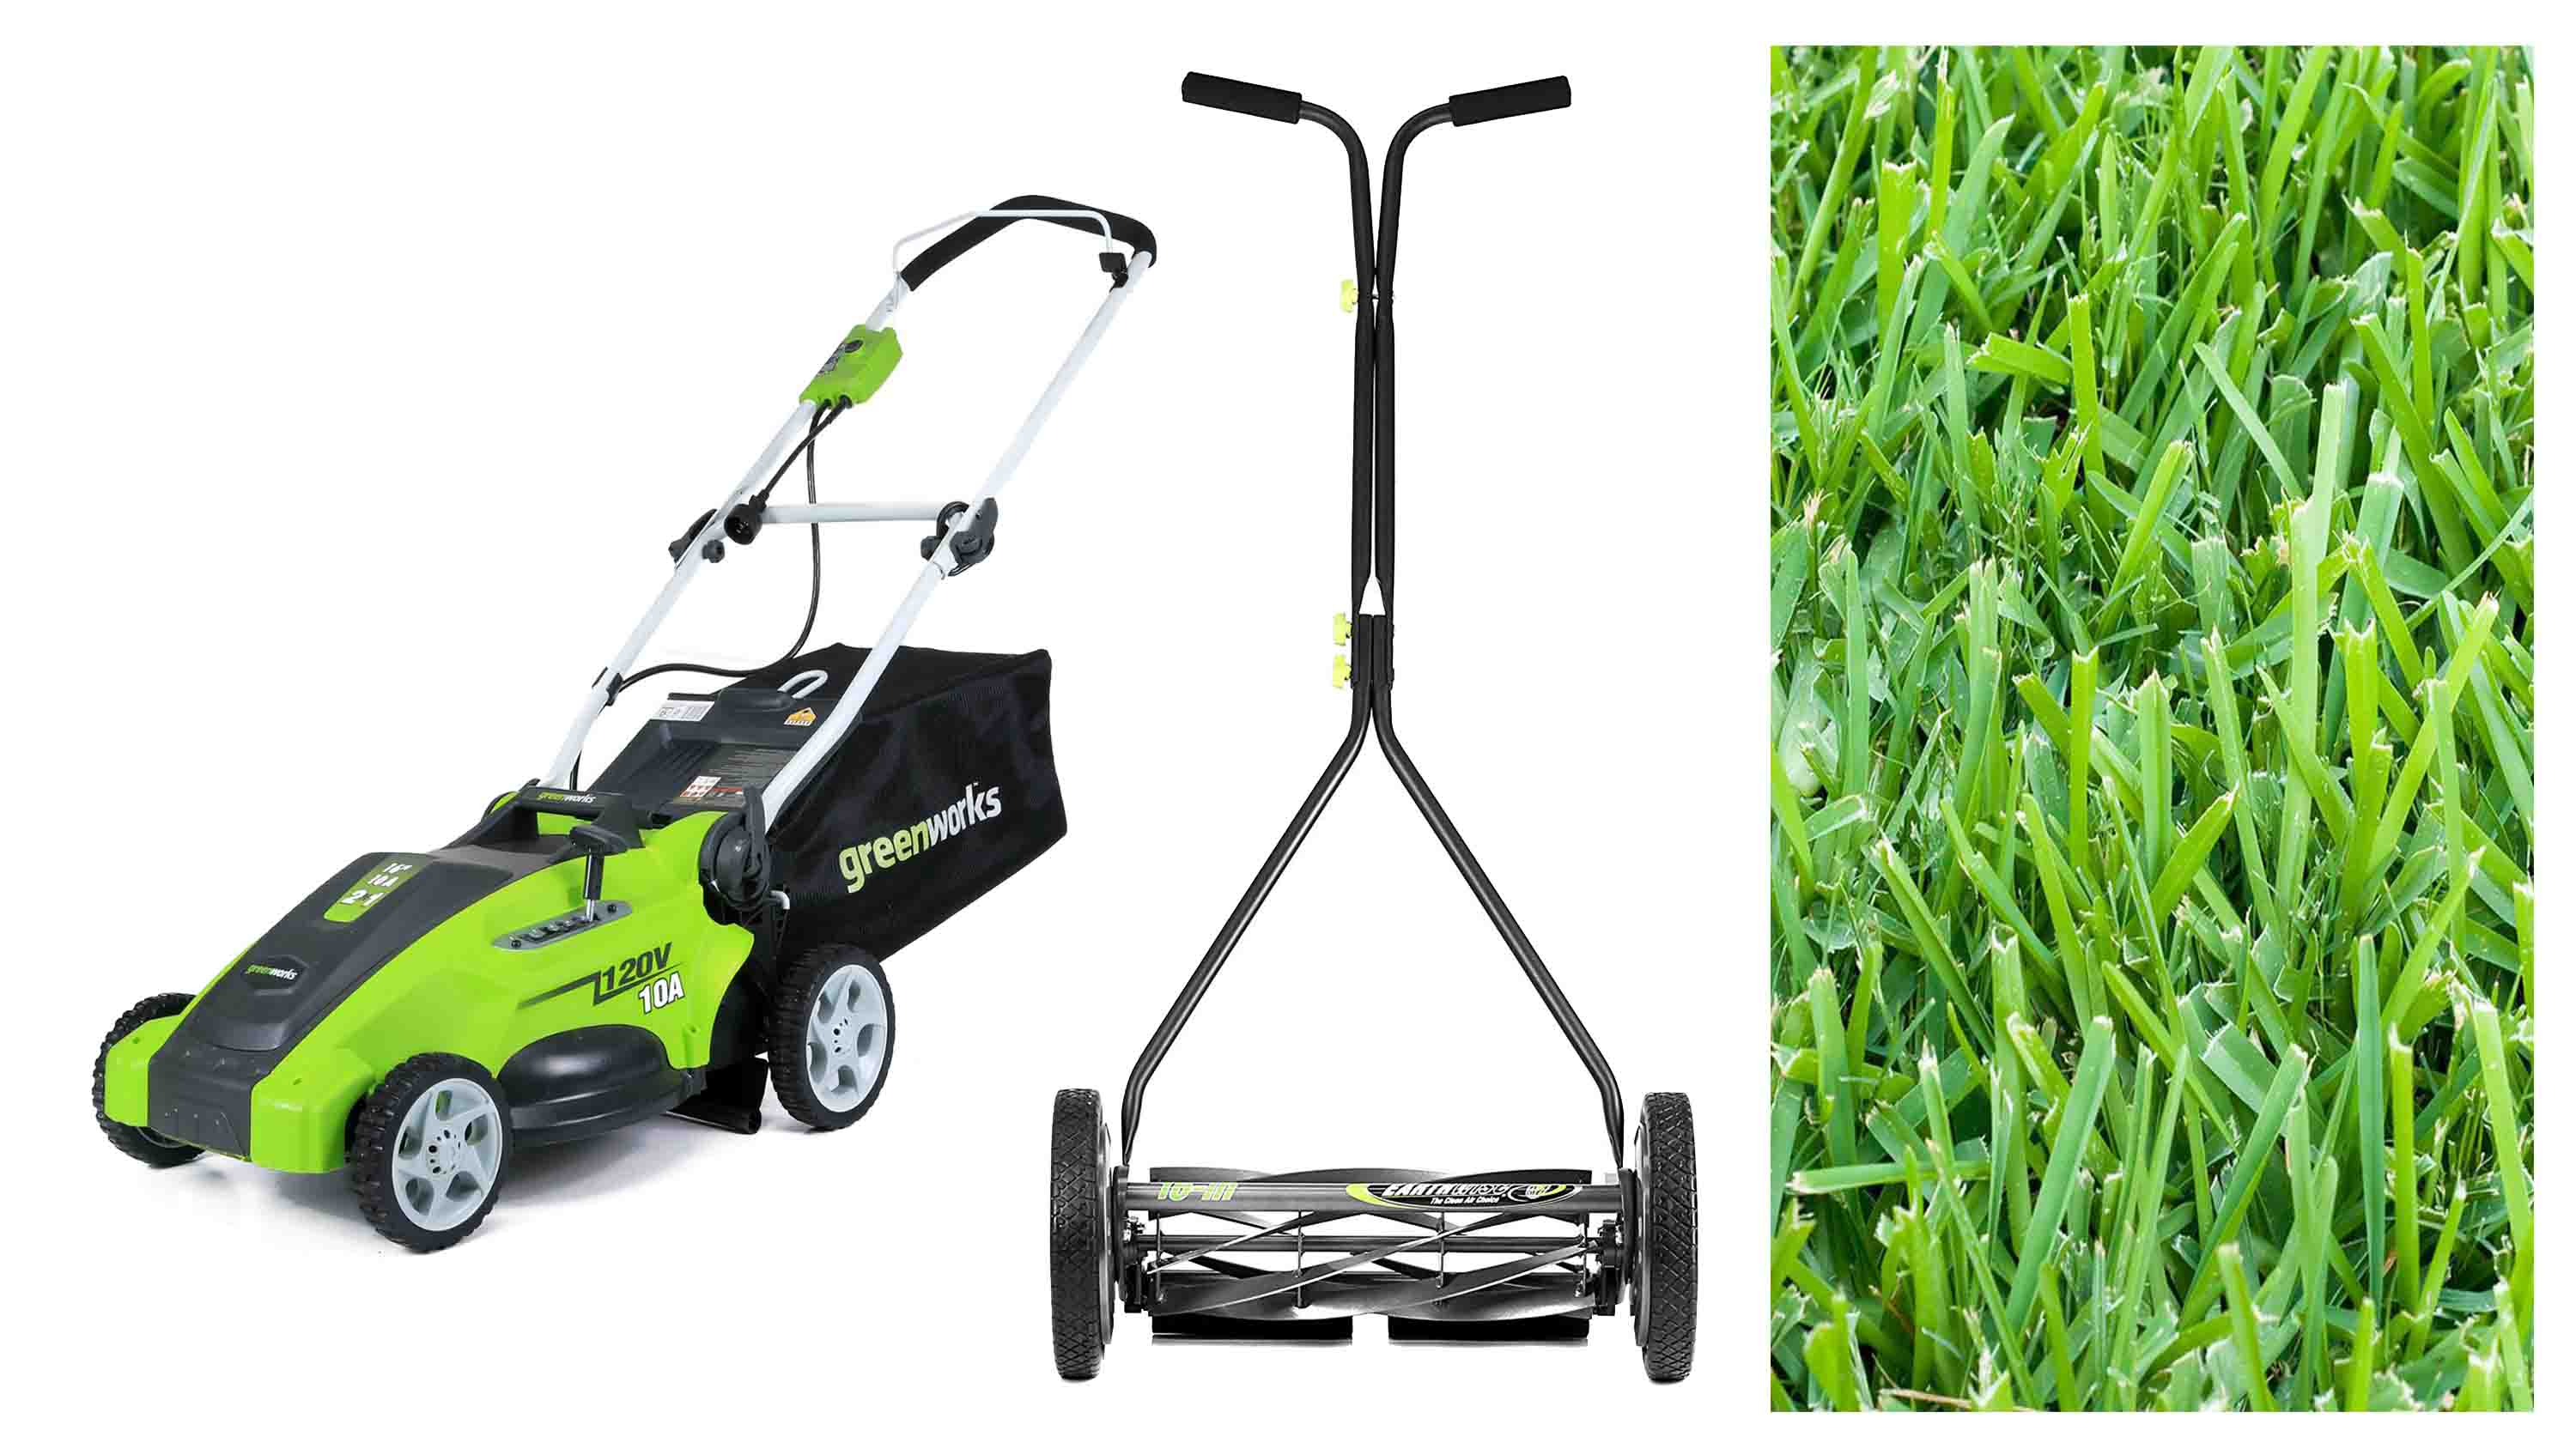 5 Best Lawn Mower for St Augustine Grass